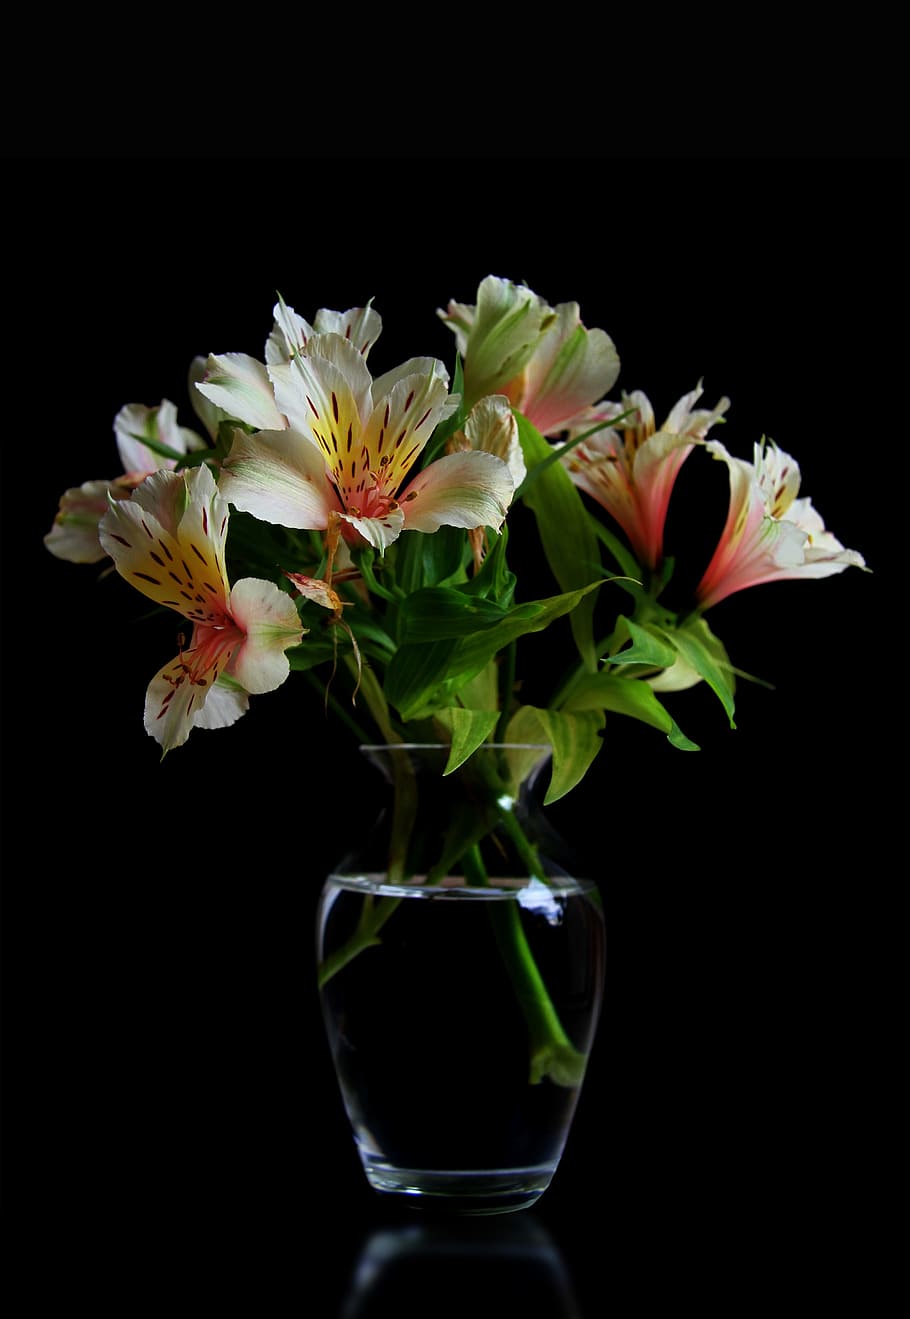 white-and-yellow petaled flowers, vase, flowers, summer flowers, plant, pink, ornamental plant, studio, vases, flower